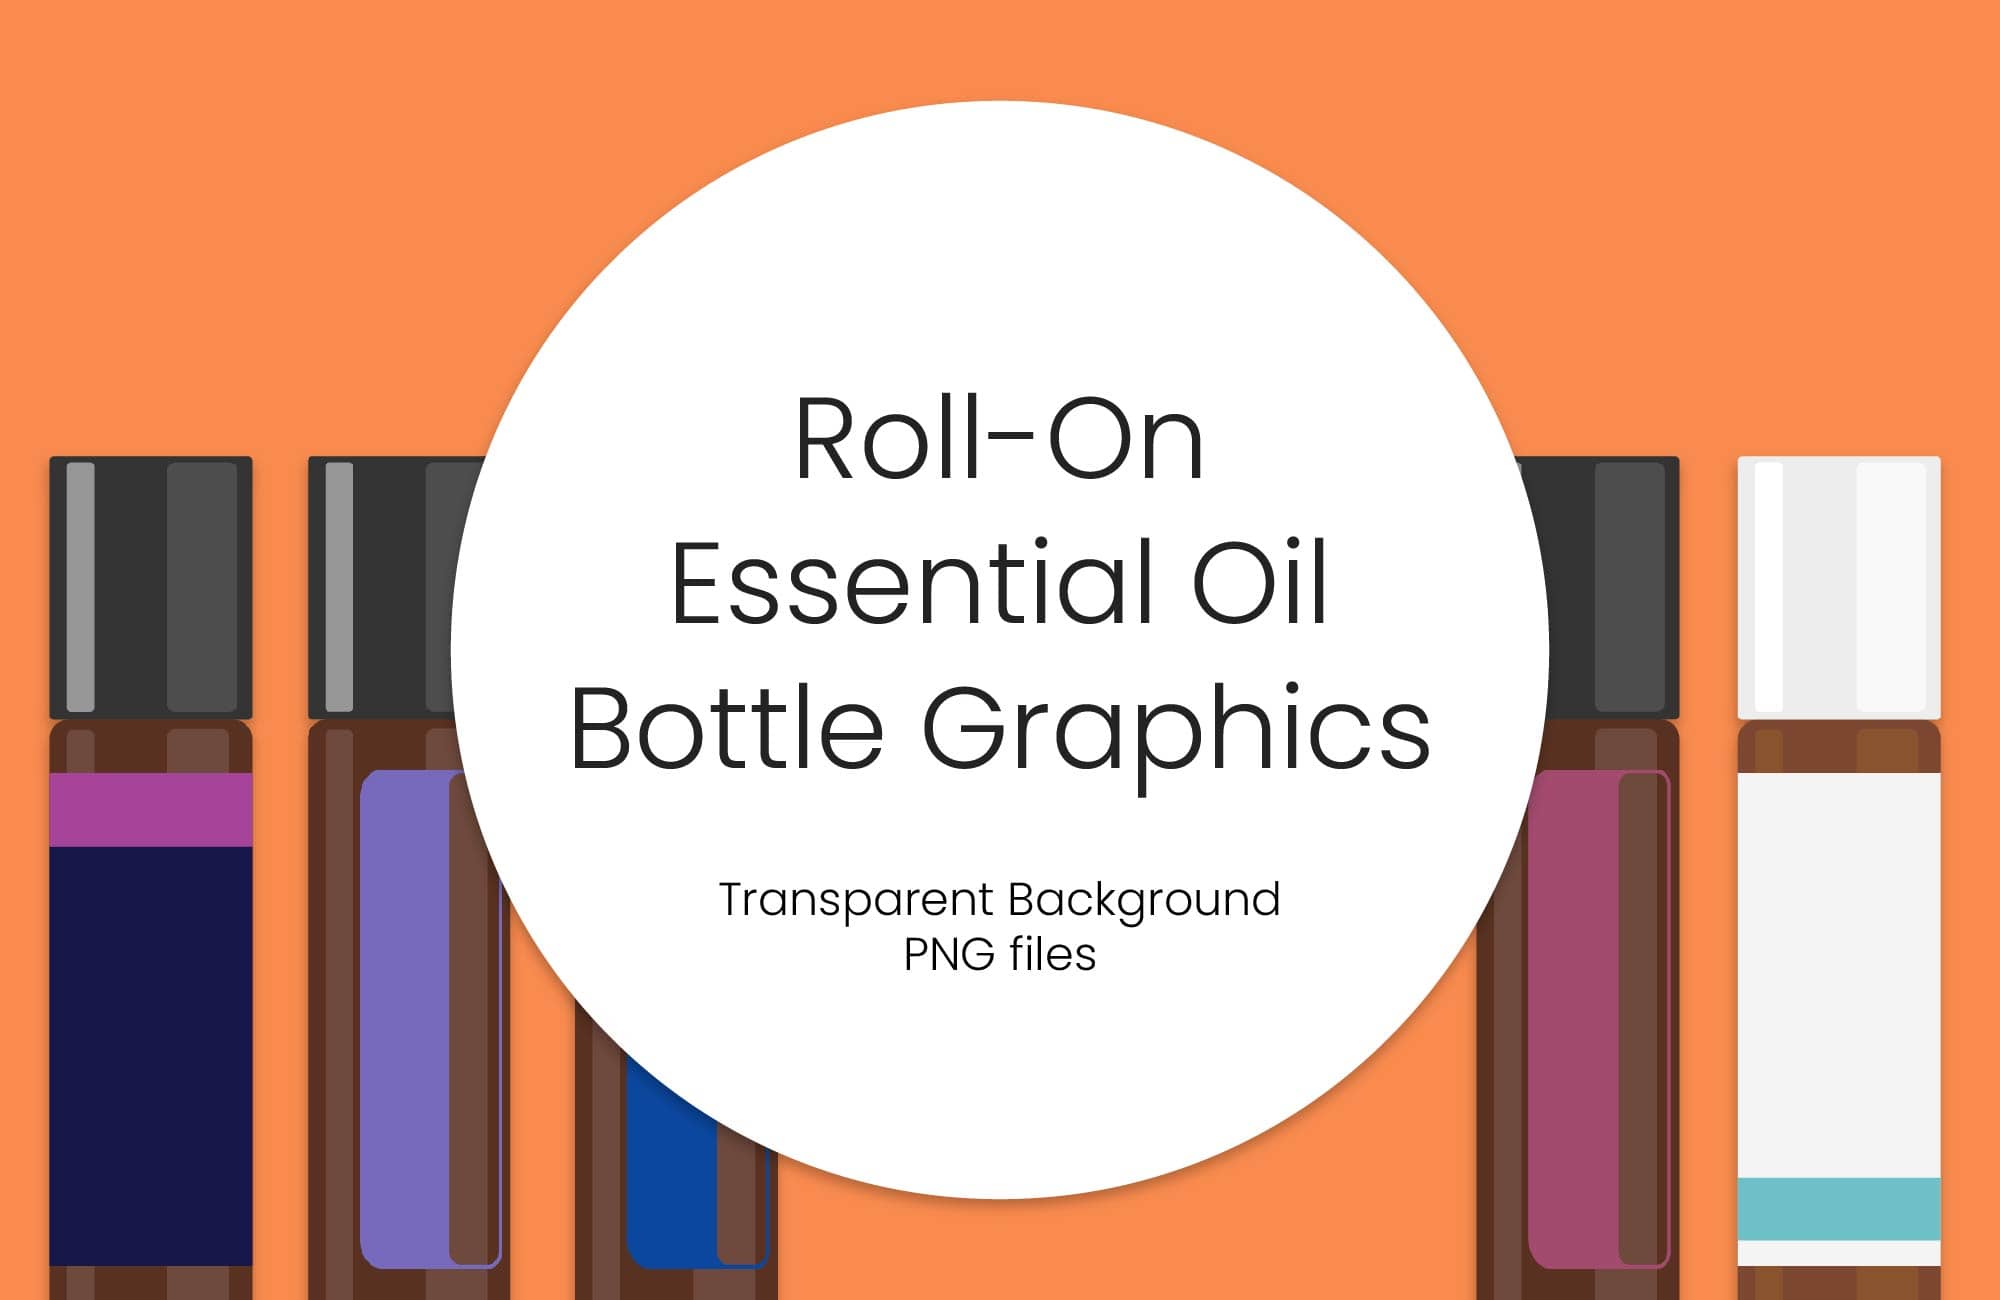 doTERRA Graphics - Essential Oil Graphics - doTERRA Bottle Graphics